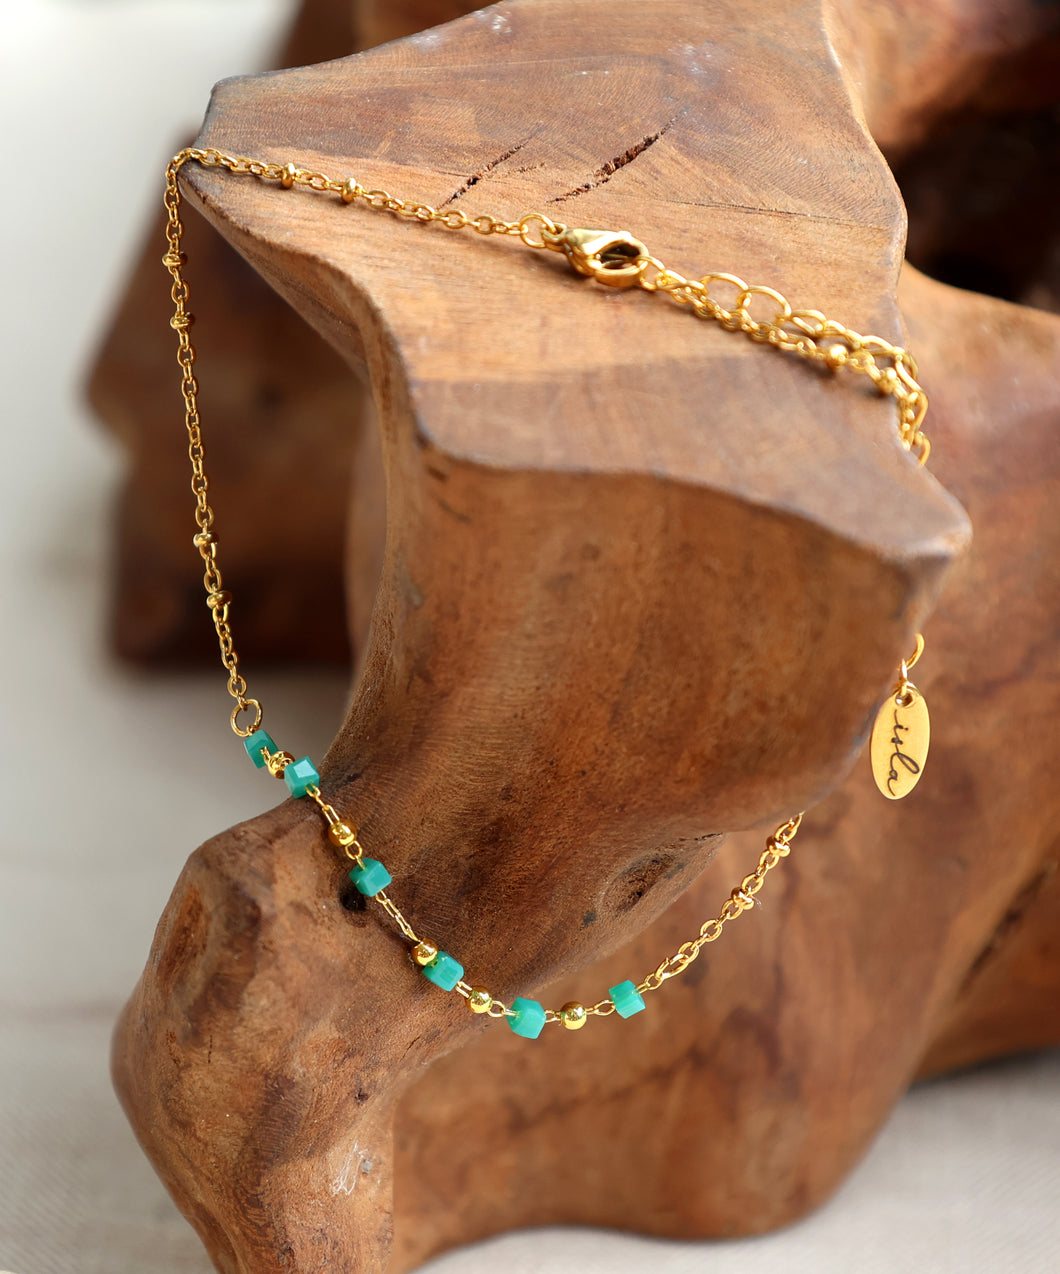 Isla Vida Turquoise Beads Anklet